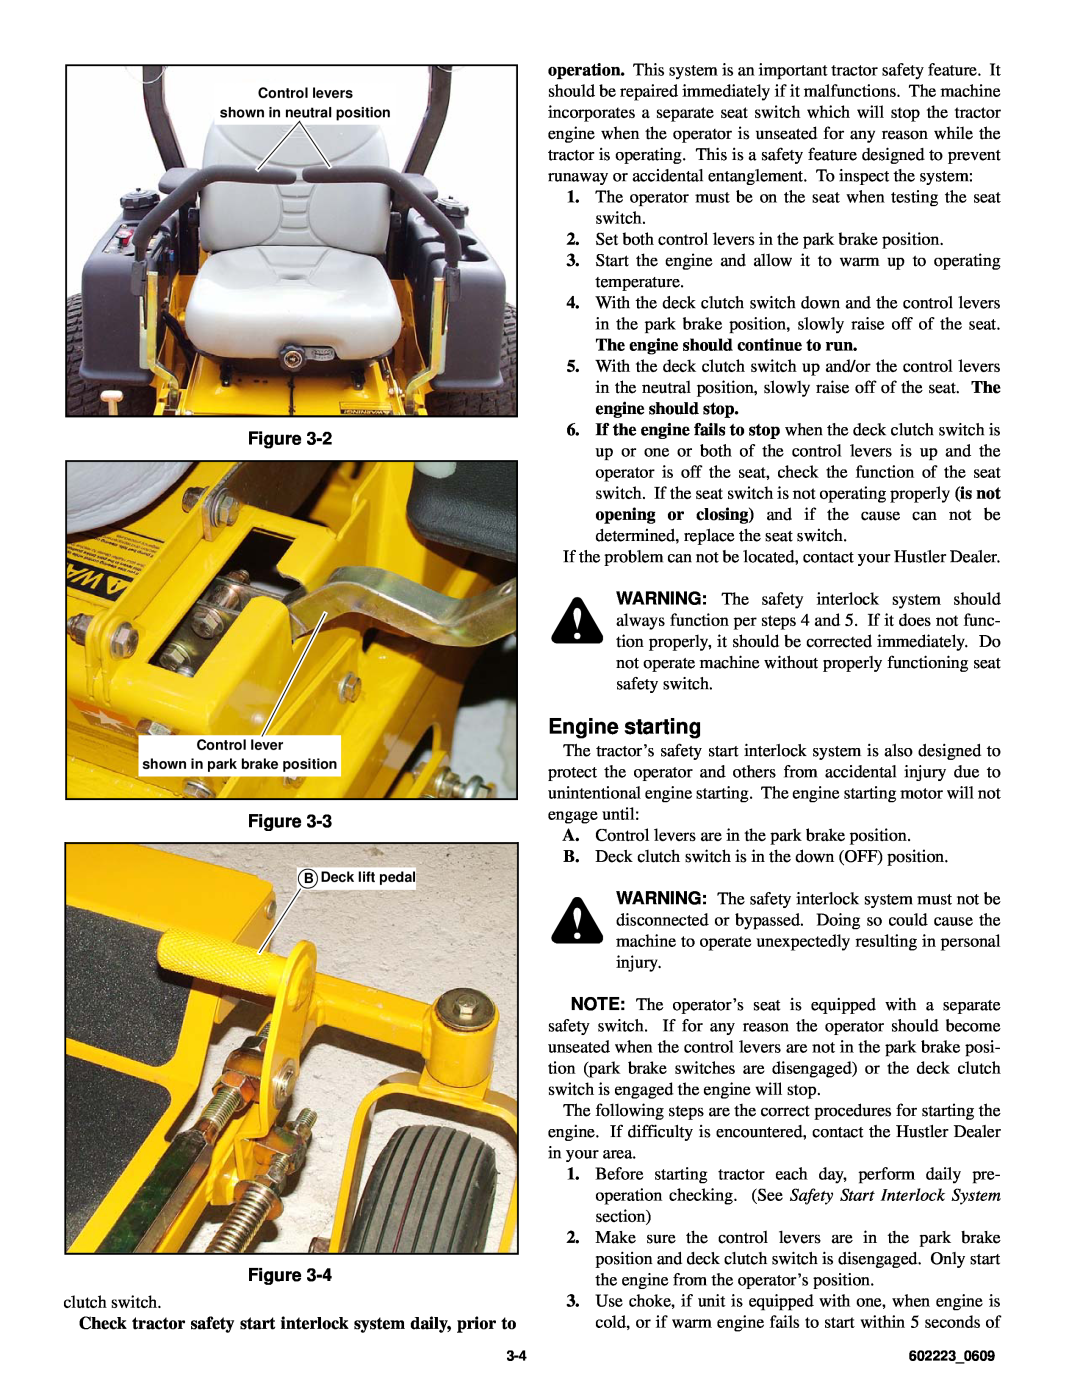 Hustler Turf Z4 manual Engine starting, Check tractor safety start interlock system daily, prior to 